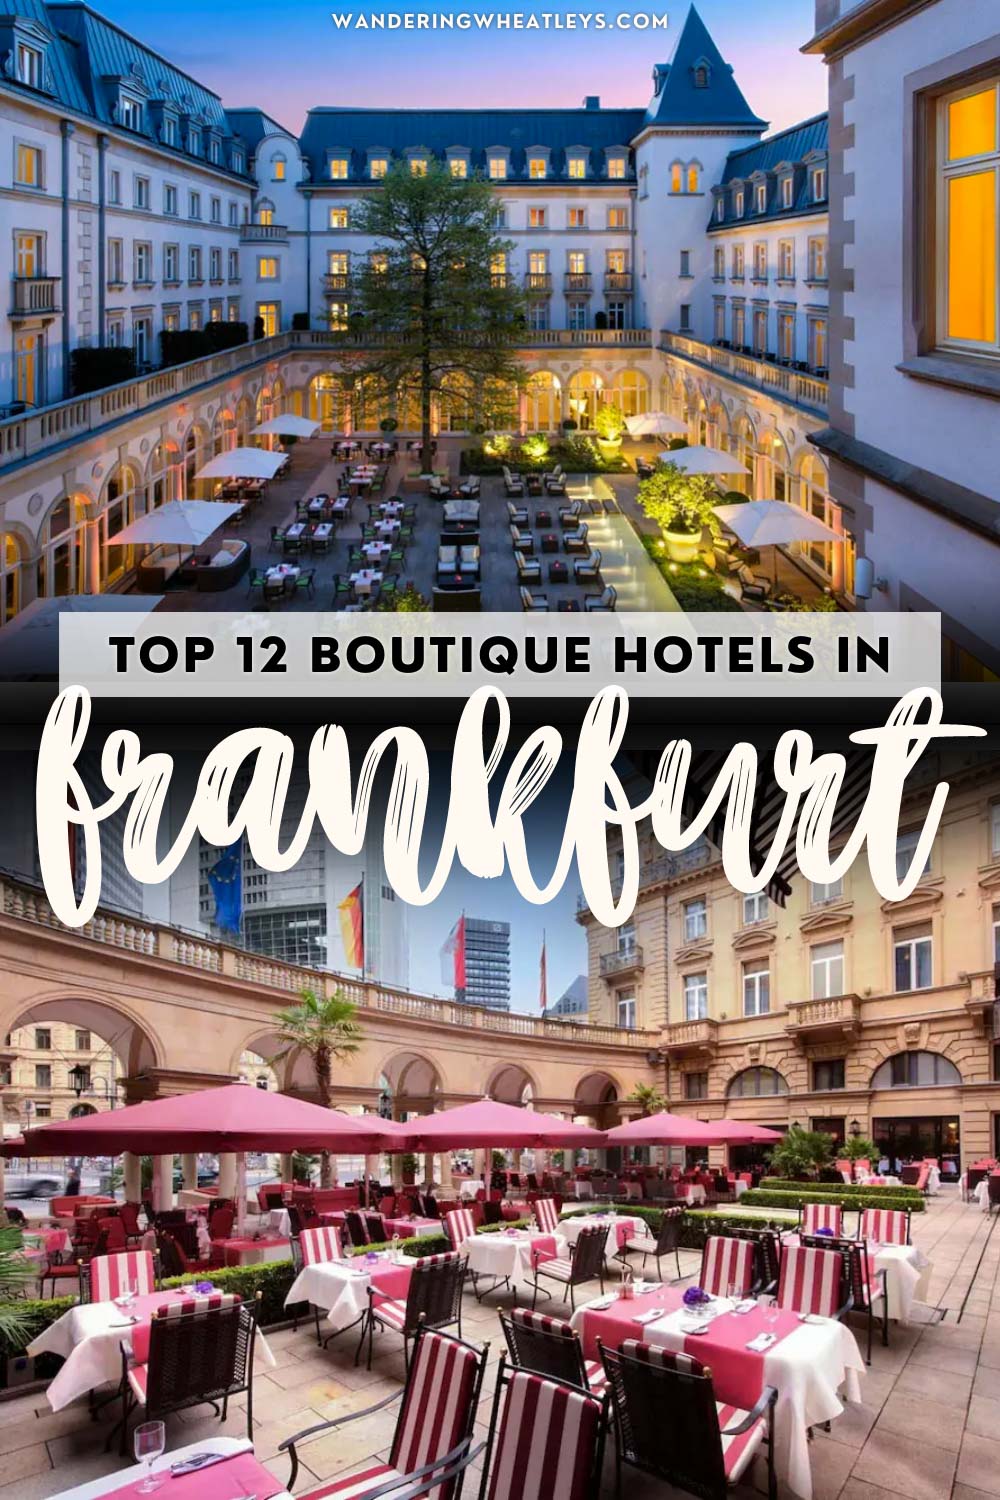 Best Boutique Hotels in Frankfurt, Germany